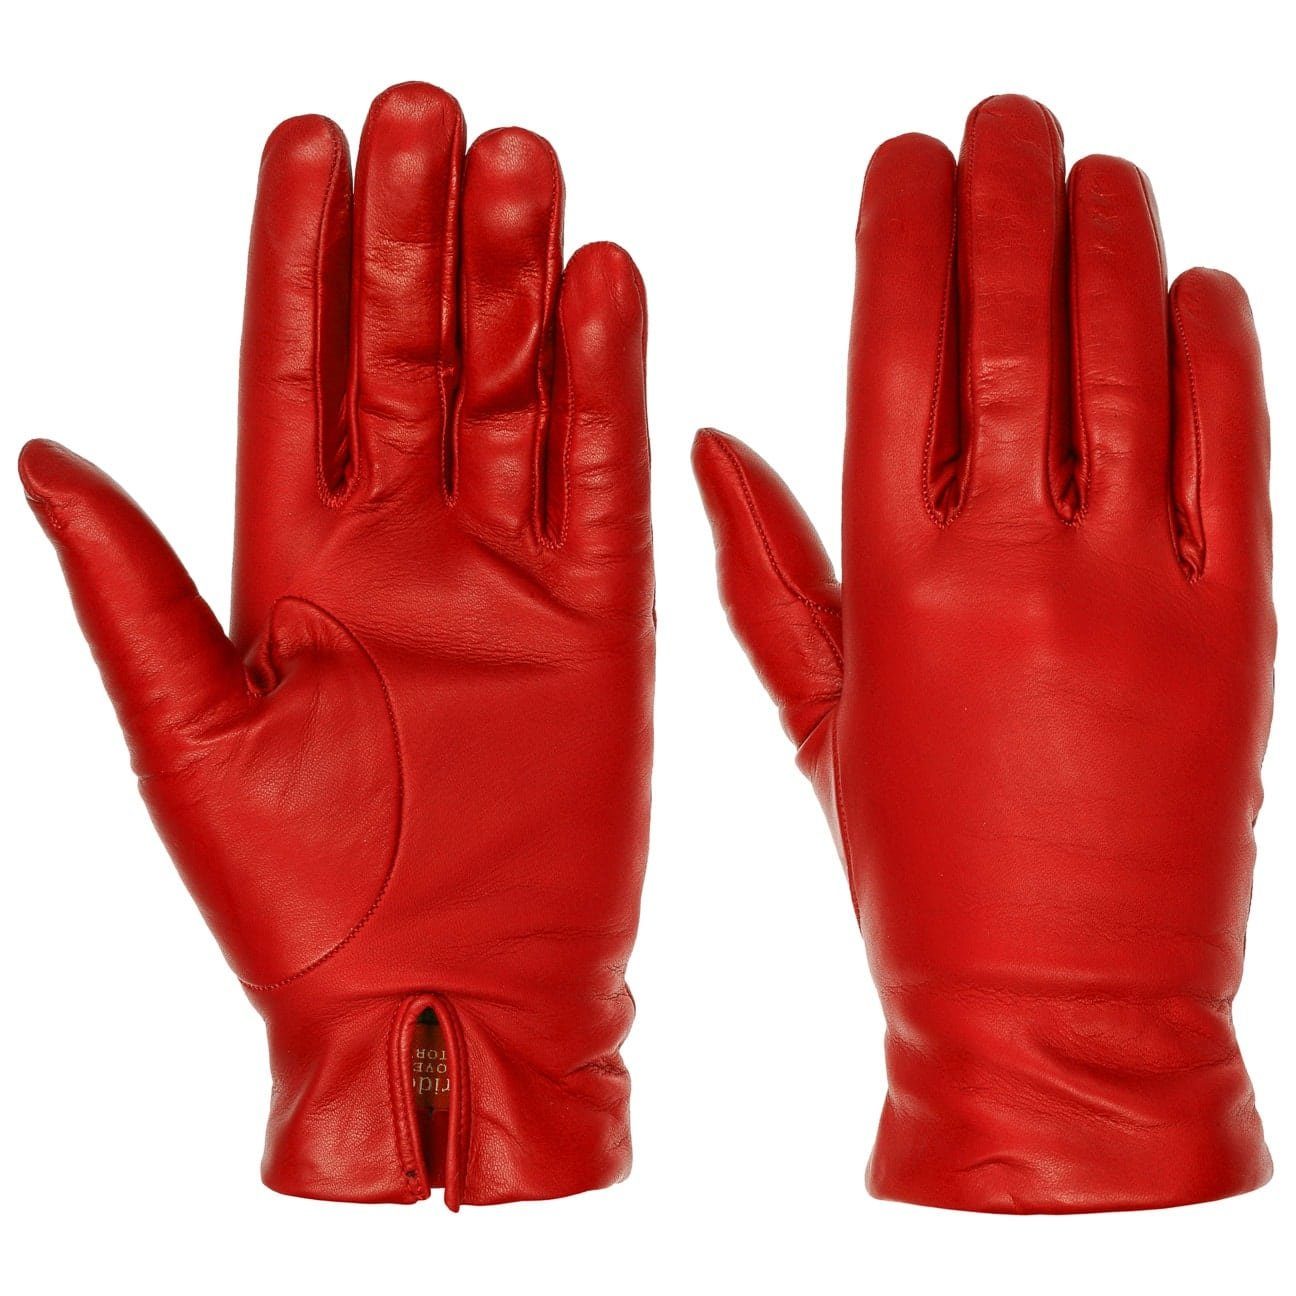 Caridei Lederhandschuhe Fingerhandschuhe mit Futter, Made in Italy rot